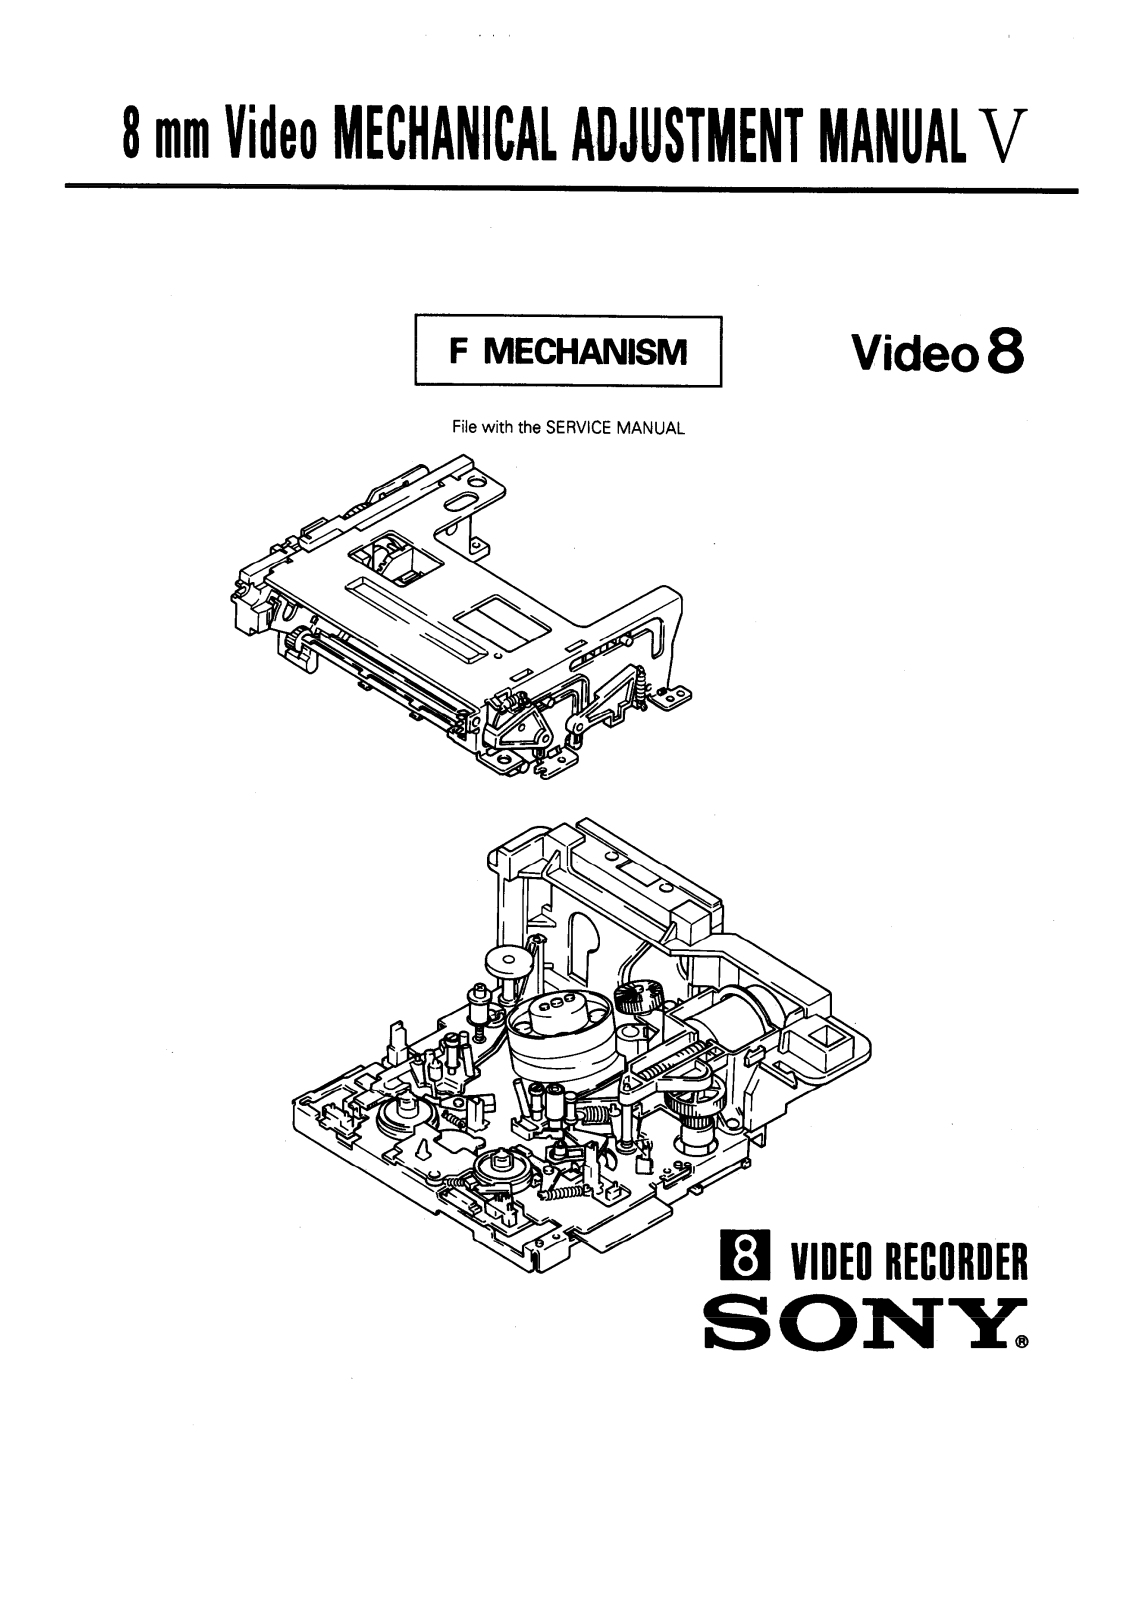 Sony F-mechanism Service Manual